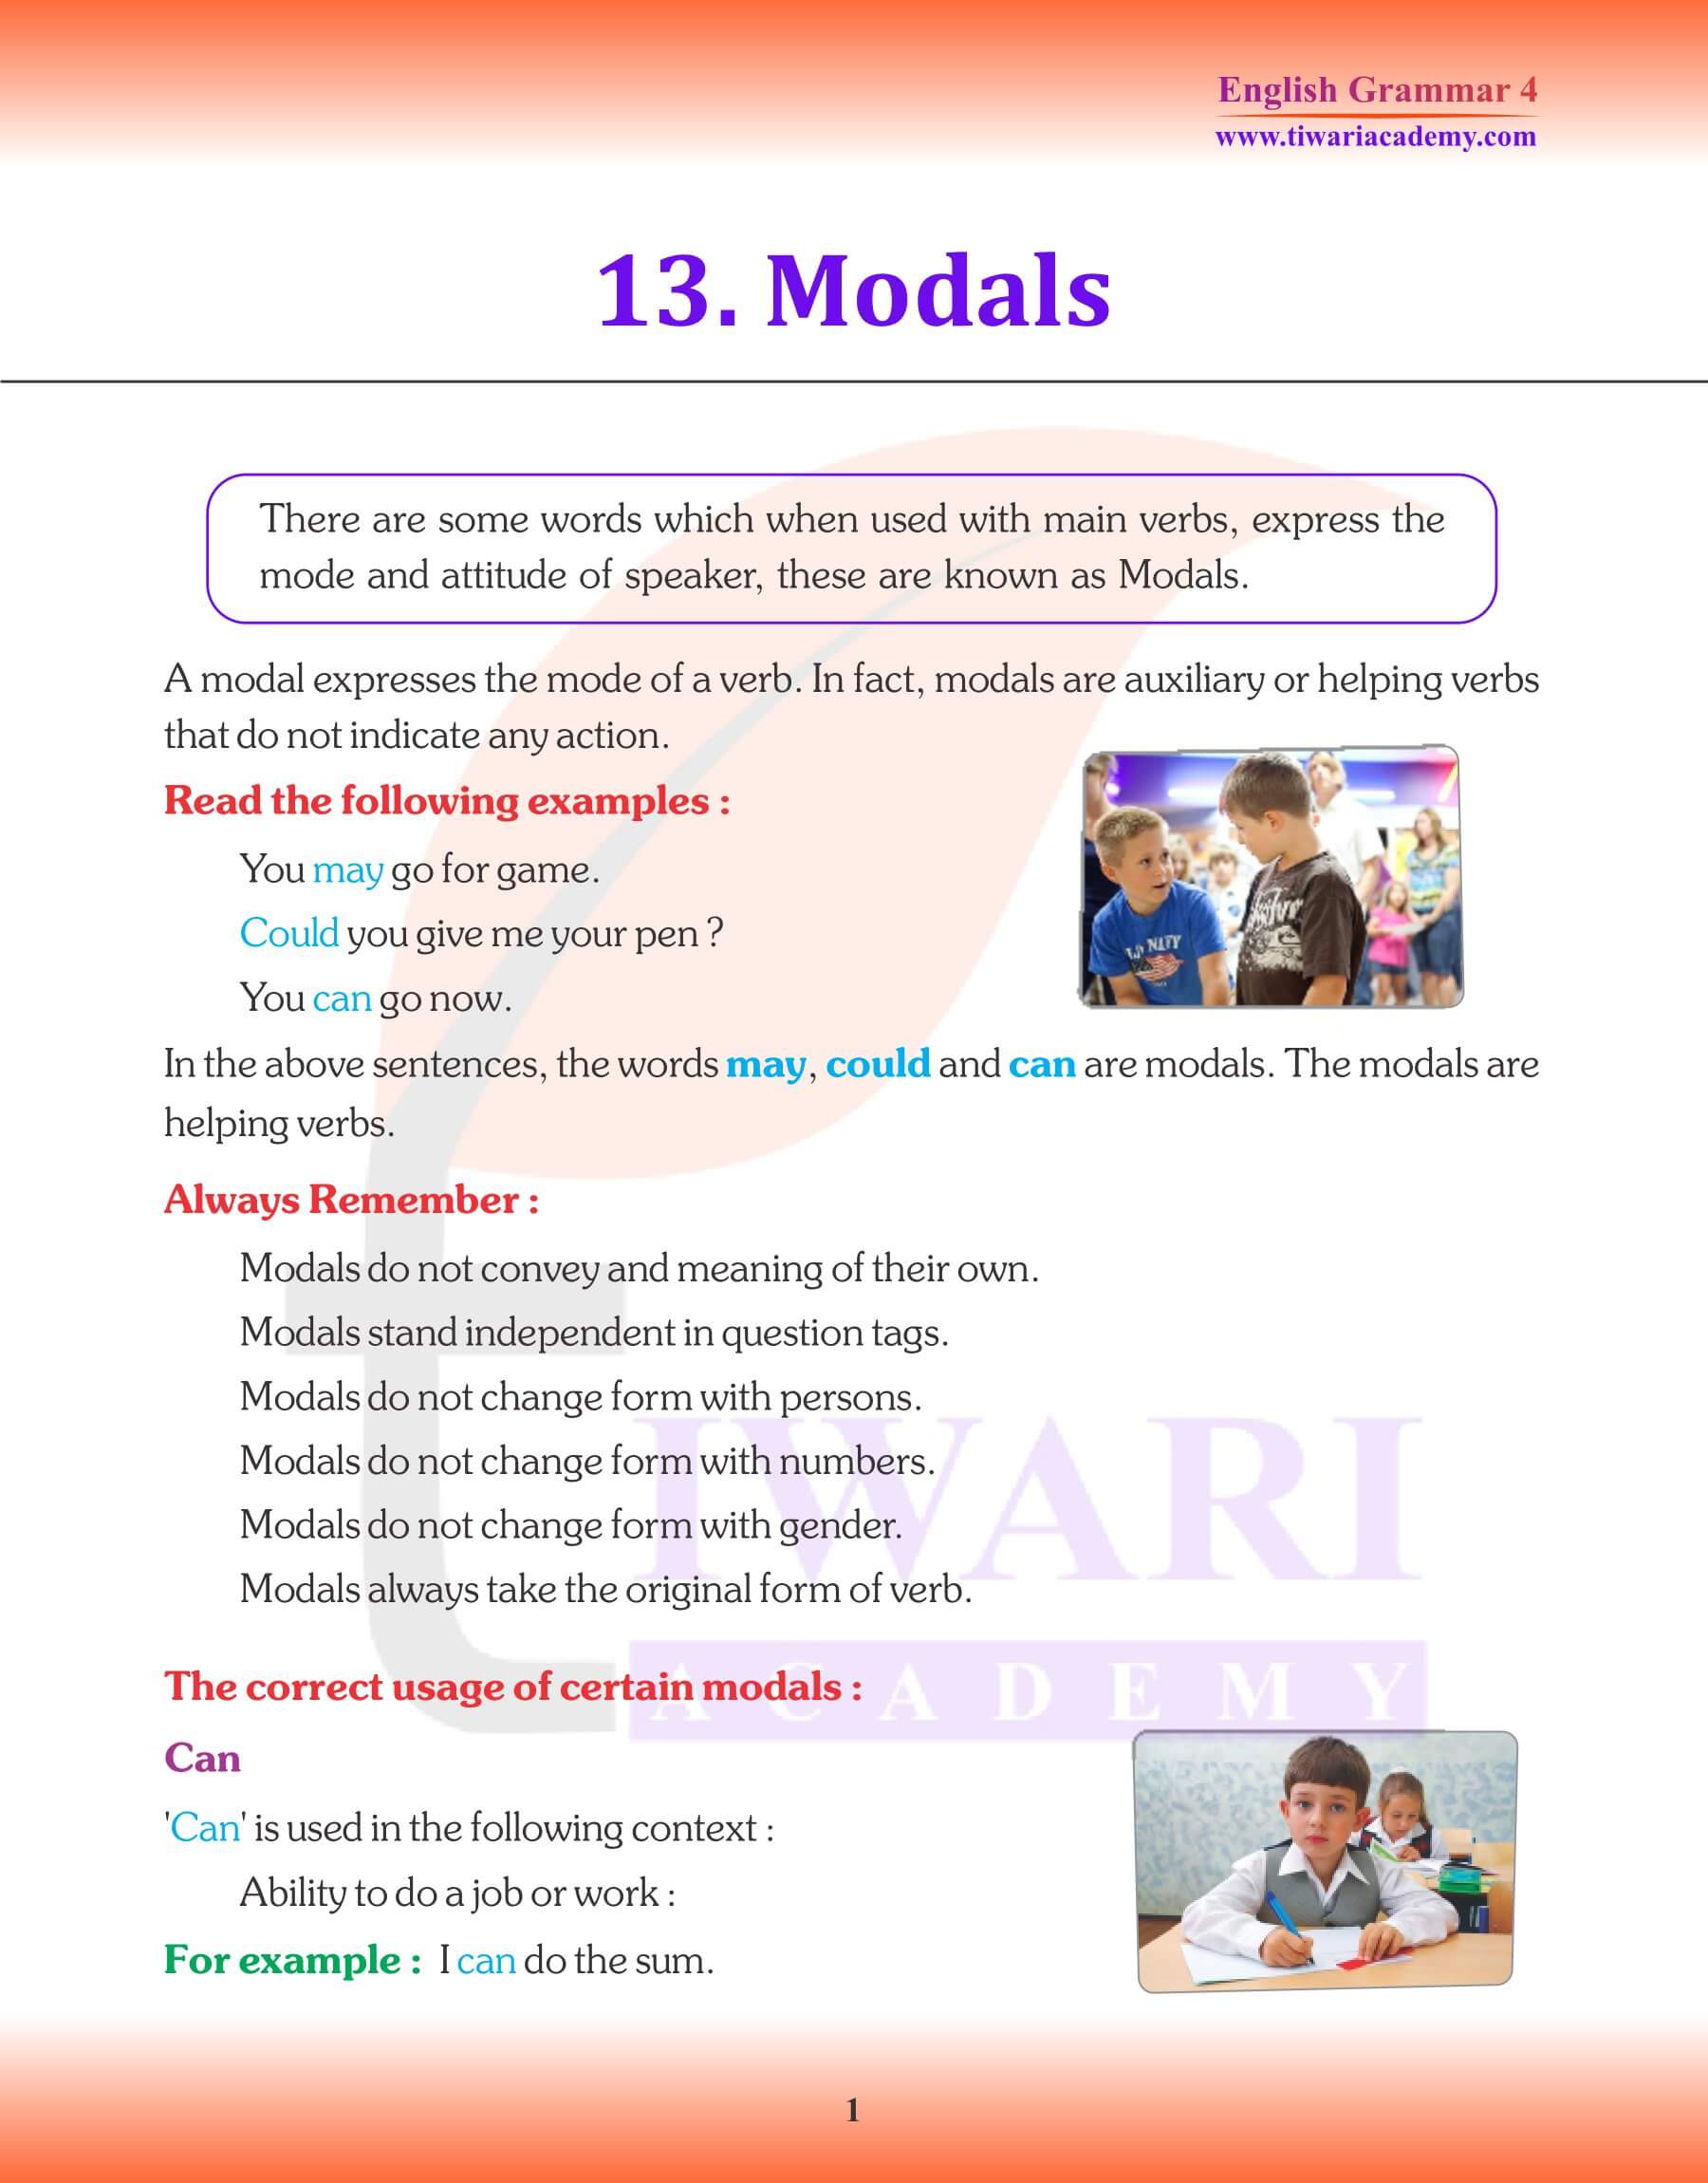 Class 4 English Grammar Modals Revision Book